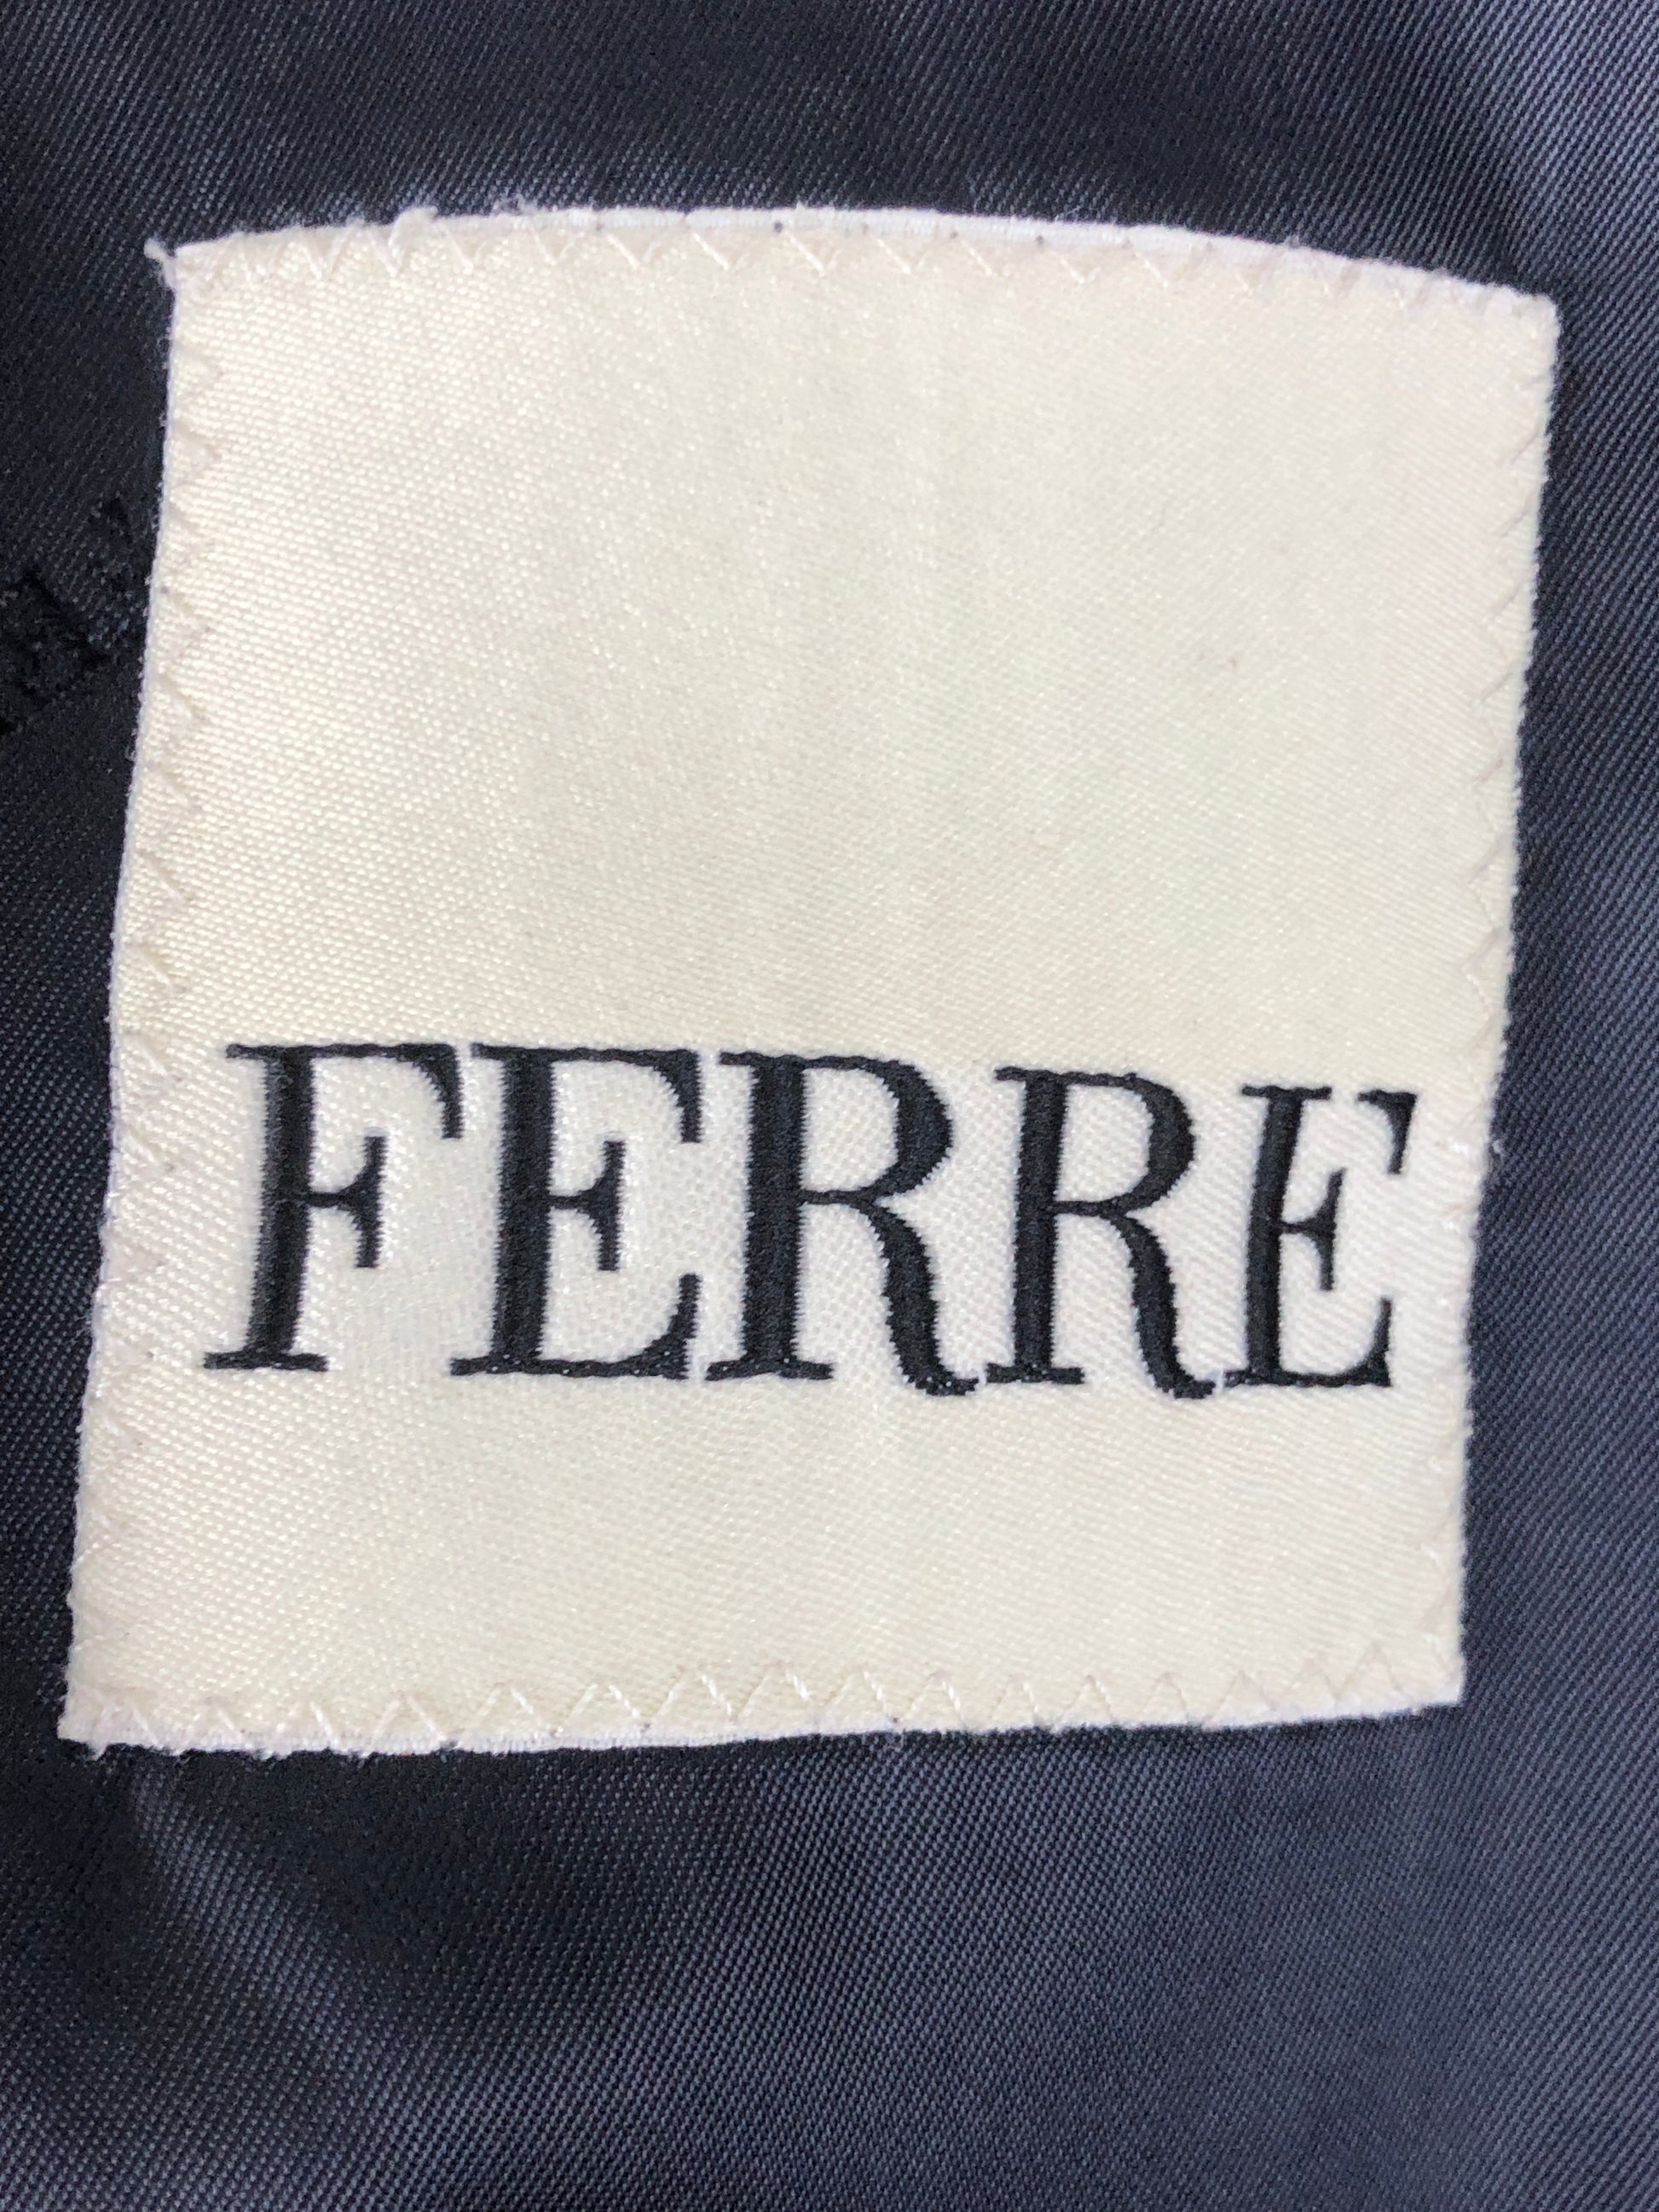 Ferre Vintage Men's Striped Suit Blazer - Medium Gray Wool